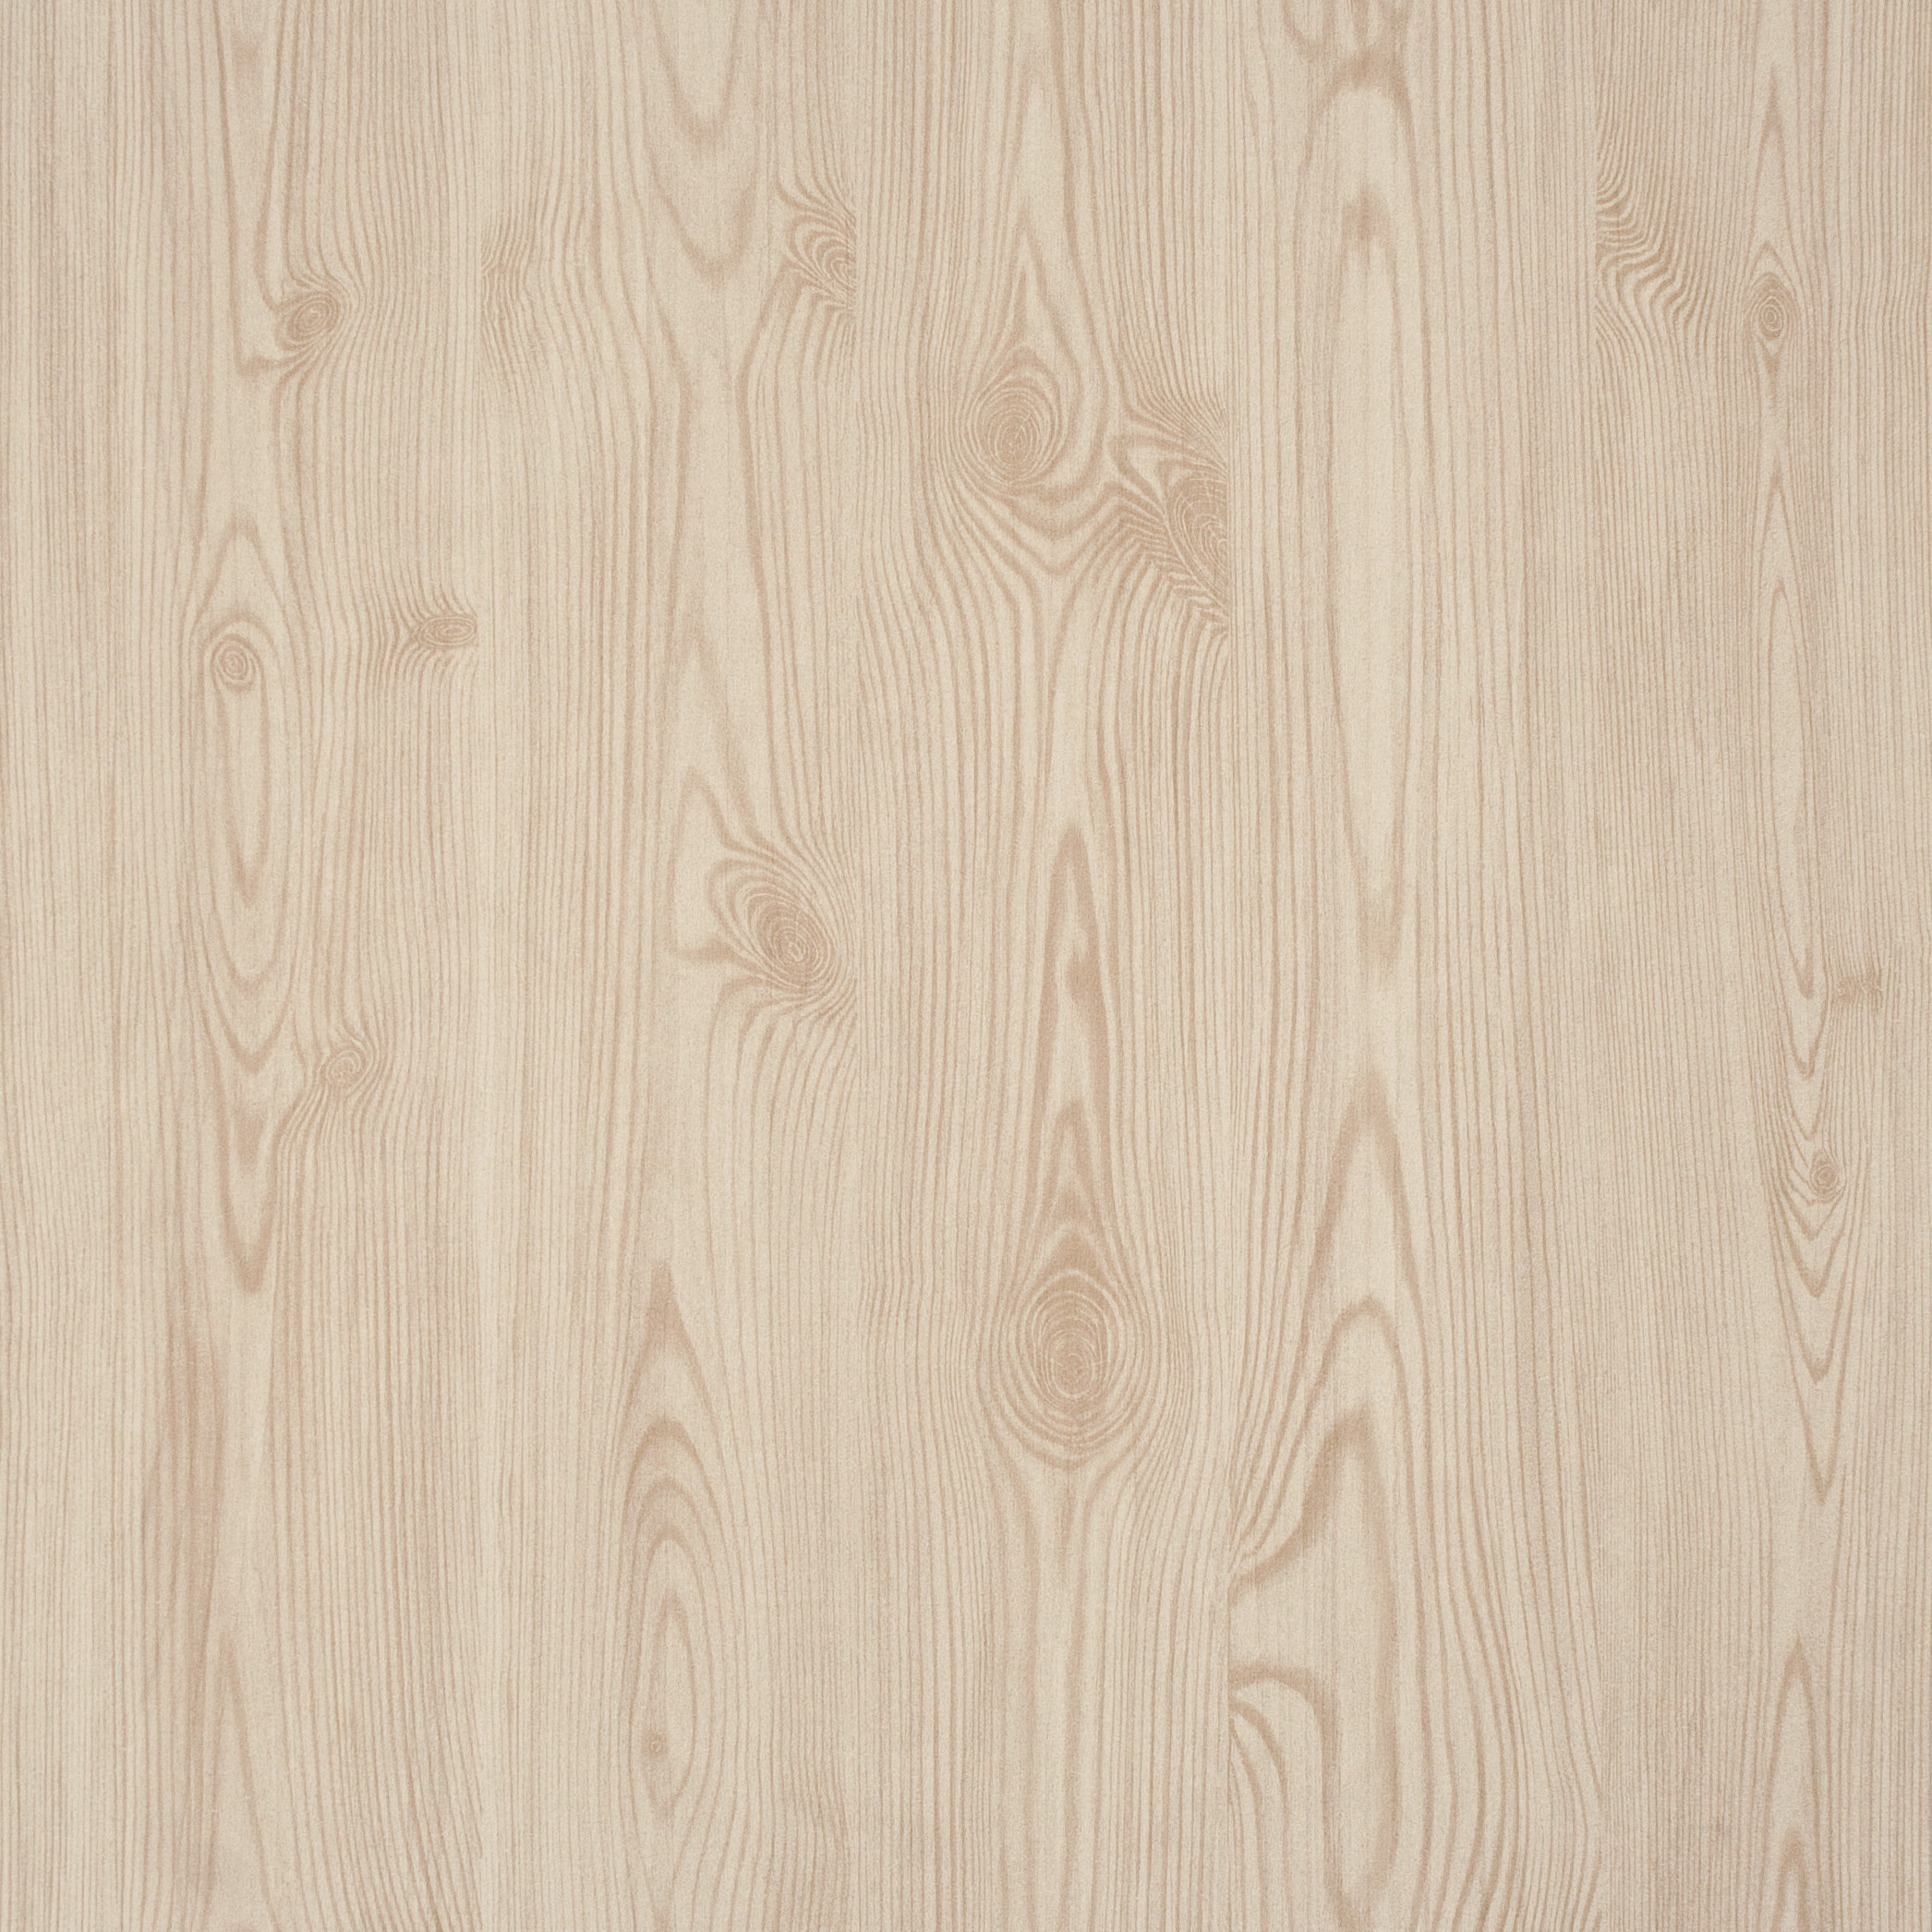 Wood Wallpaper brown / Hout Behang Bruin – Layers by Edward van Vliet 49050  – BN